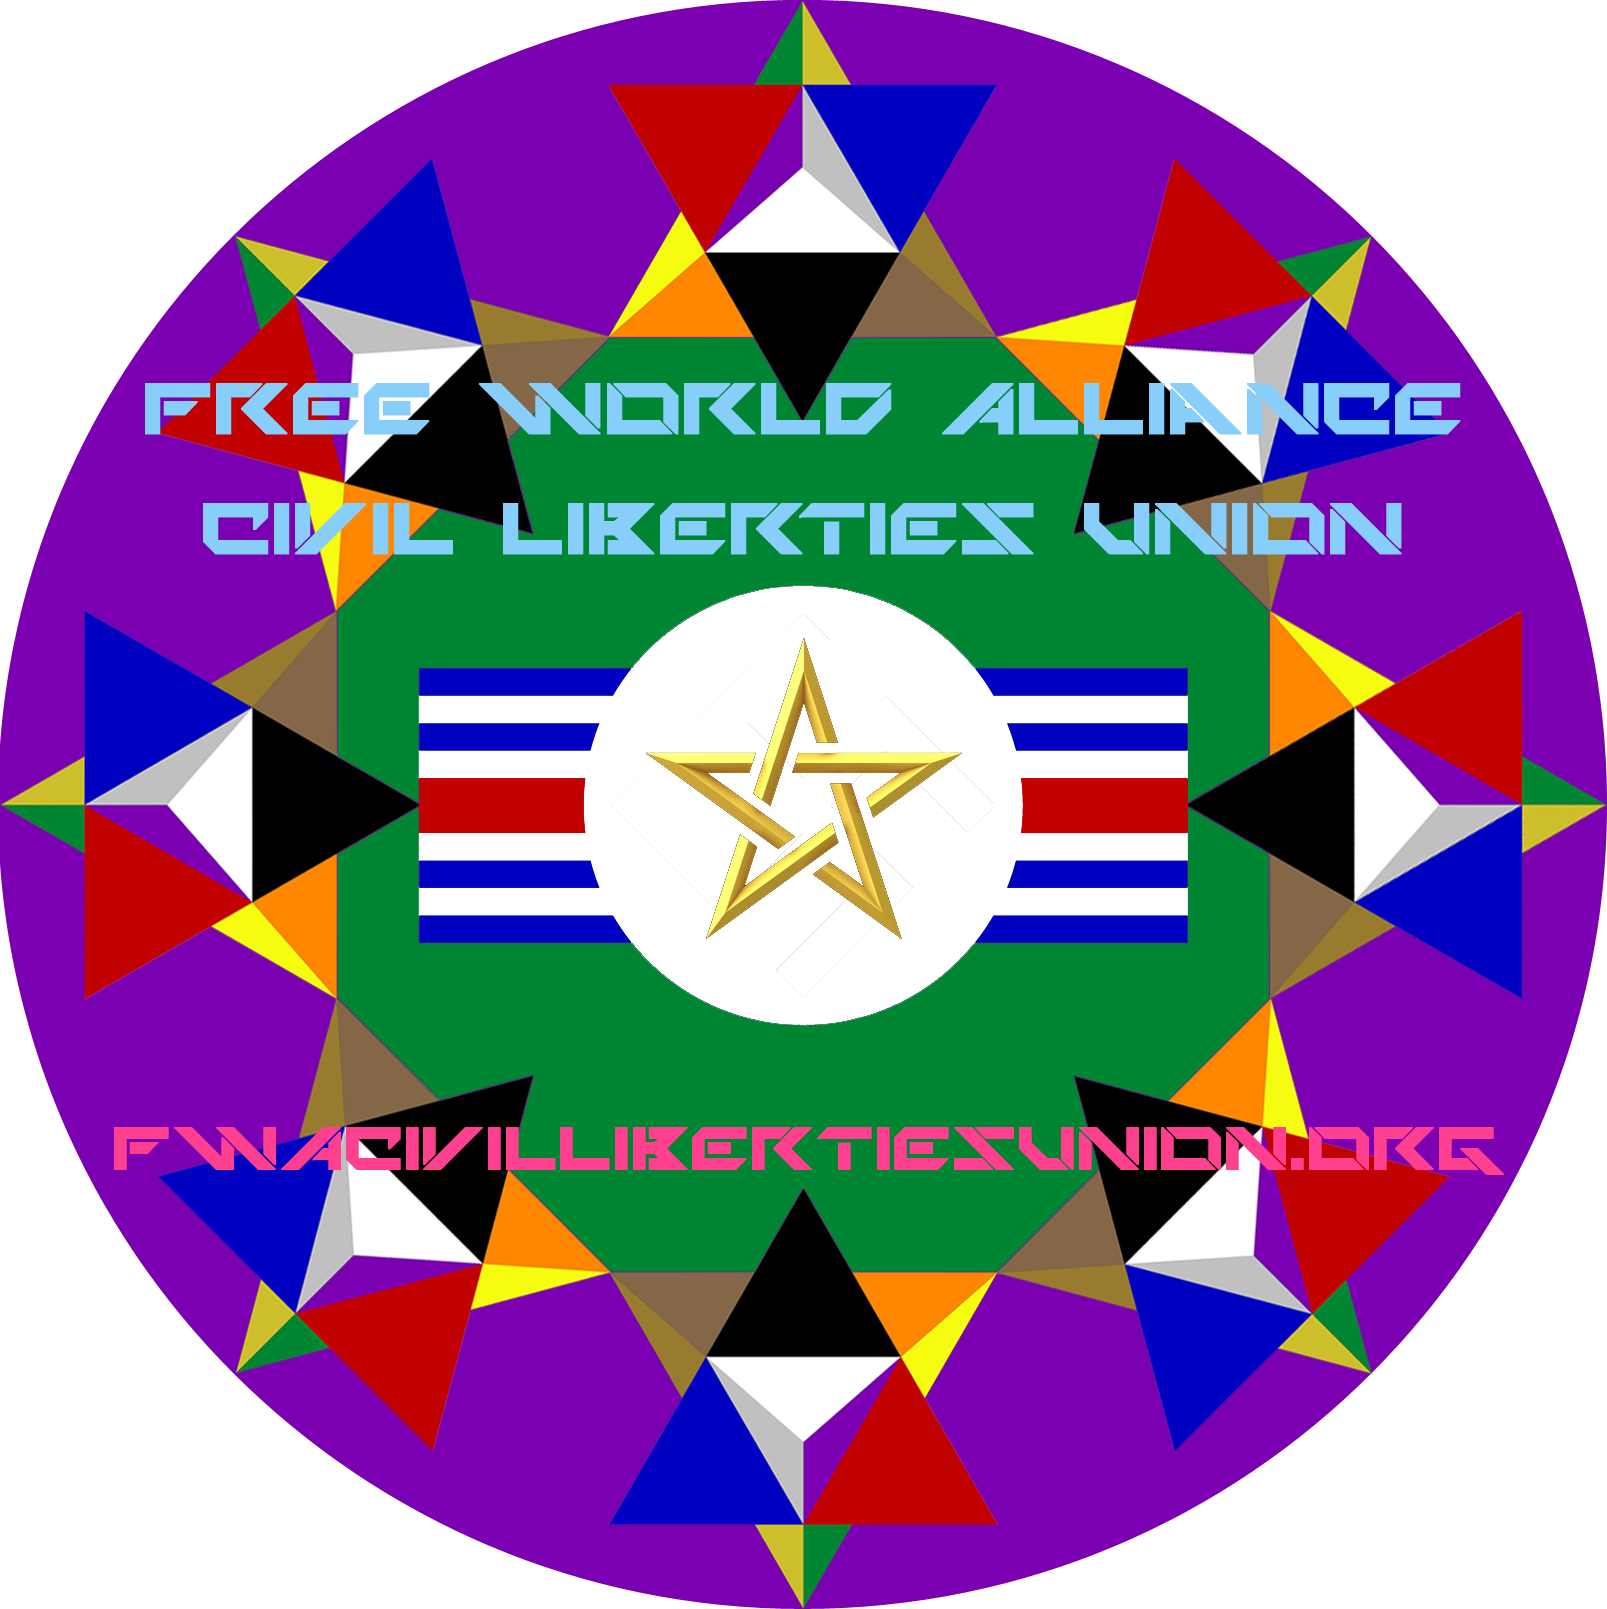 Free World Alliance Civil Liberties Union